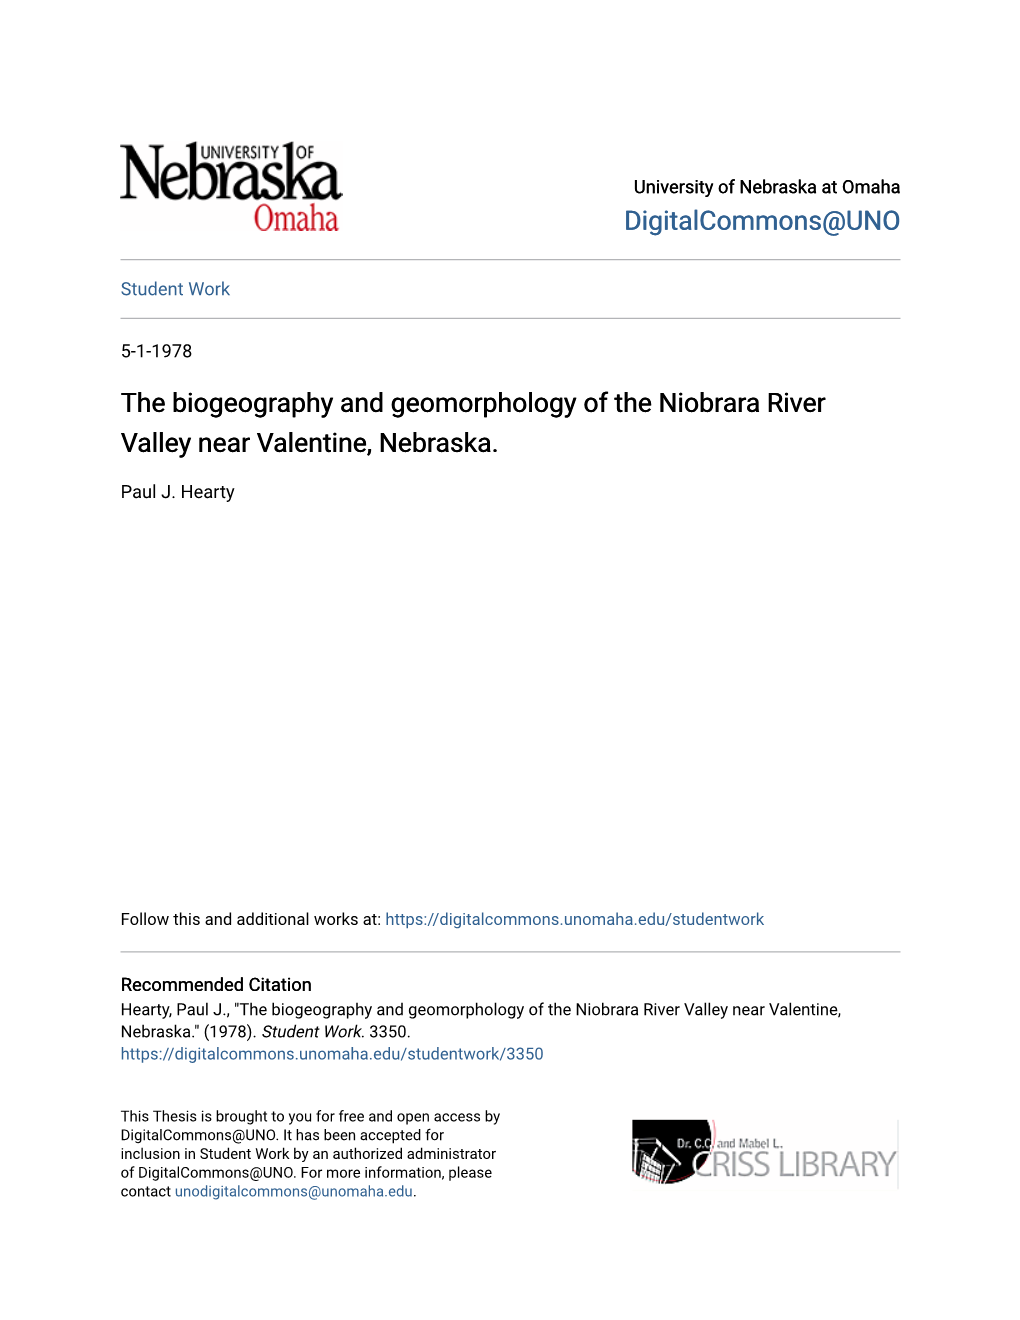 The Biogeography and Geomorphology of the Niobrara River Valley Near Valentine, Nebraska